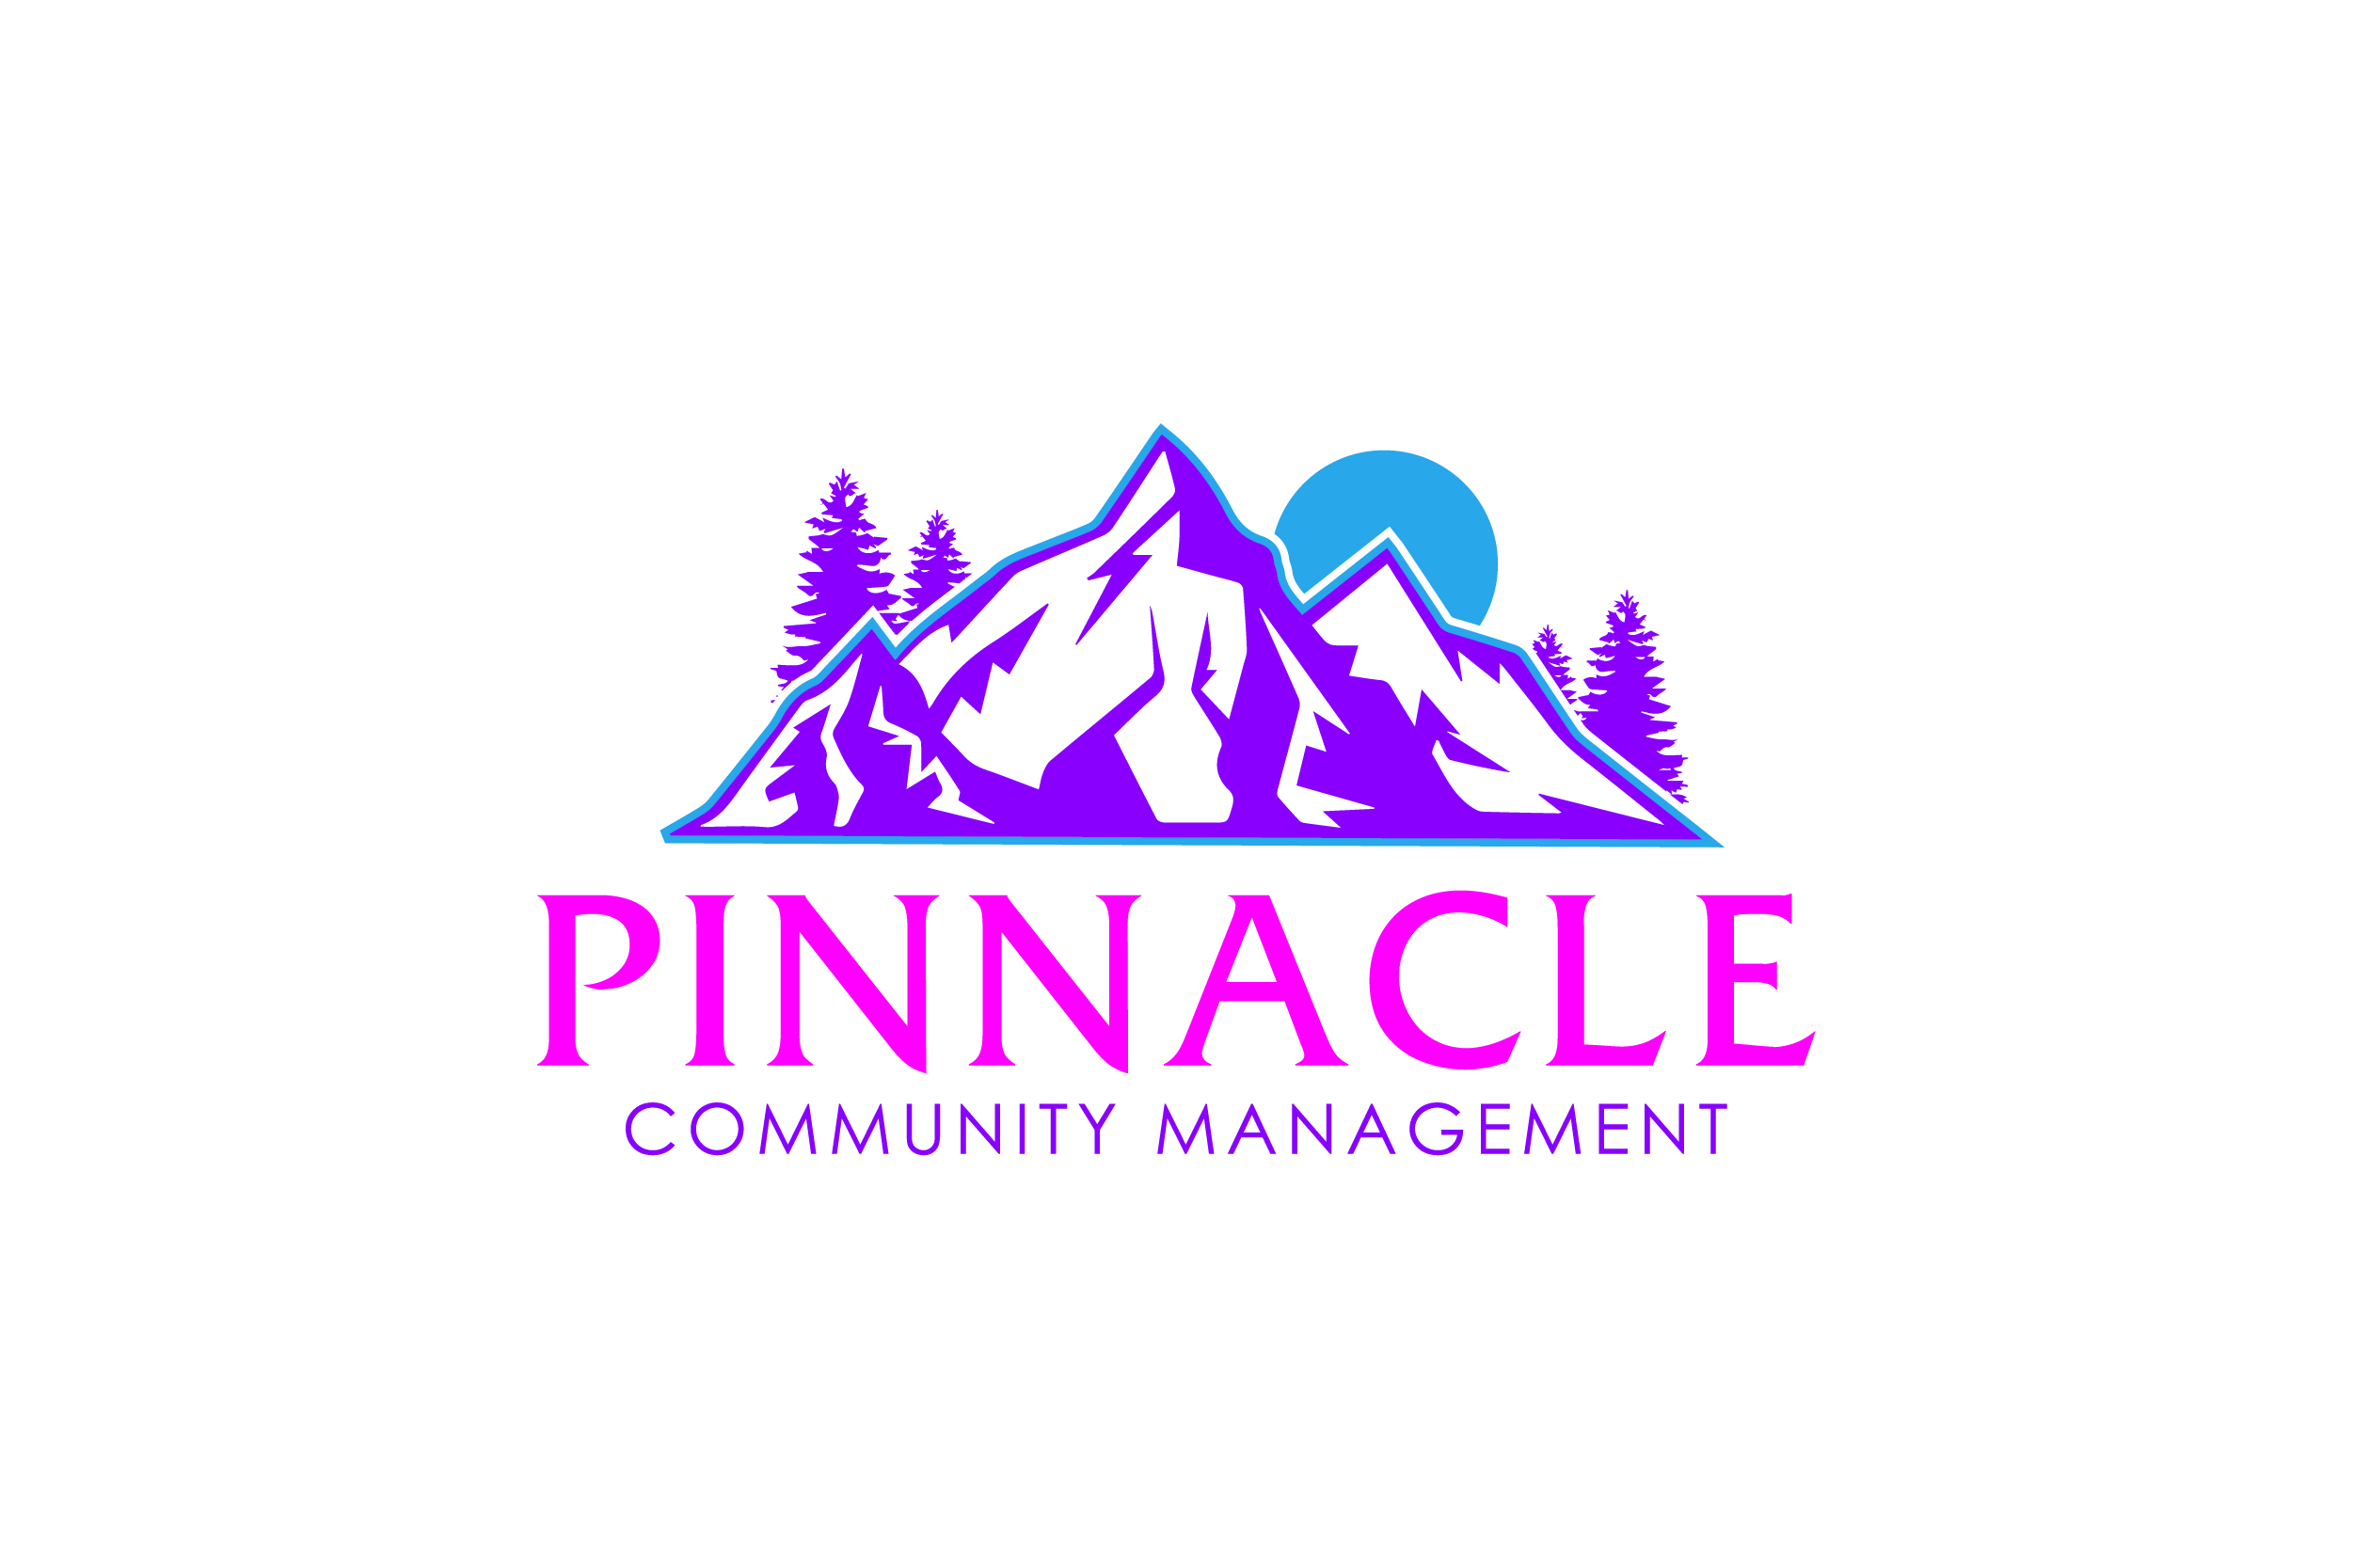 Pinnacle Community Management logo